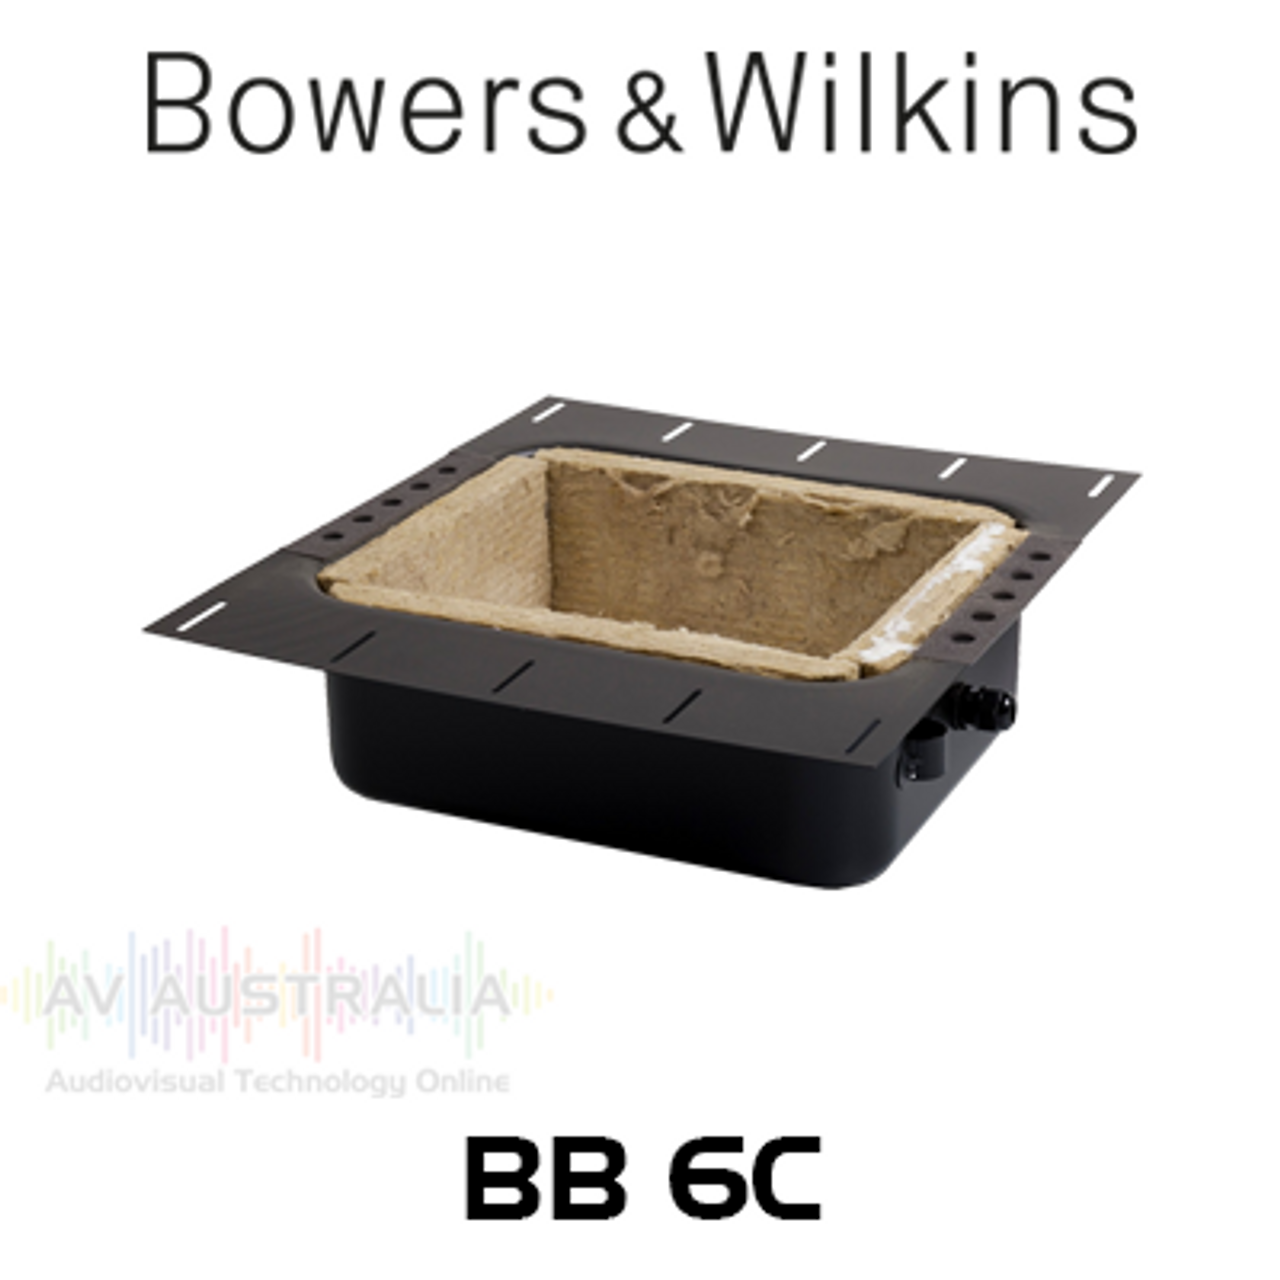 Bowers & Wilkins BB 6C In-Ceiling Backbox (Each)